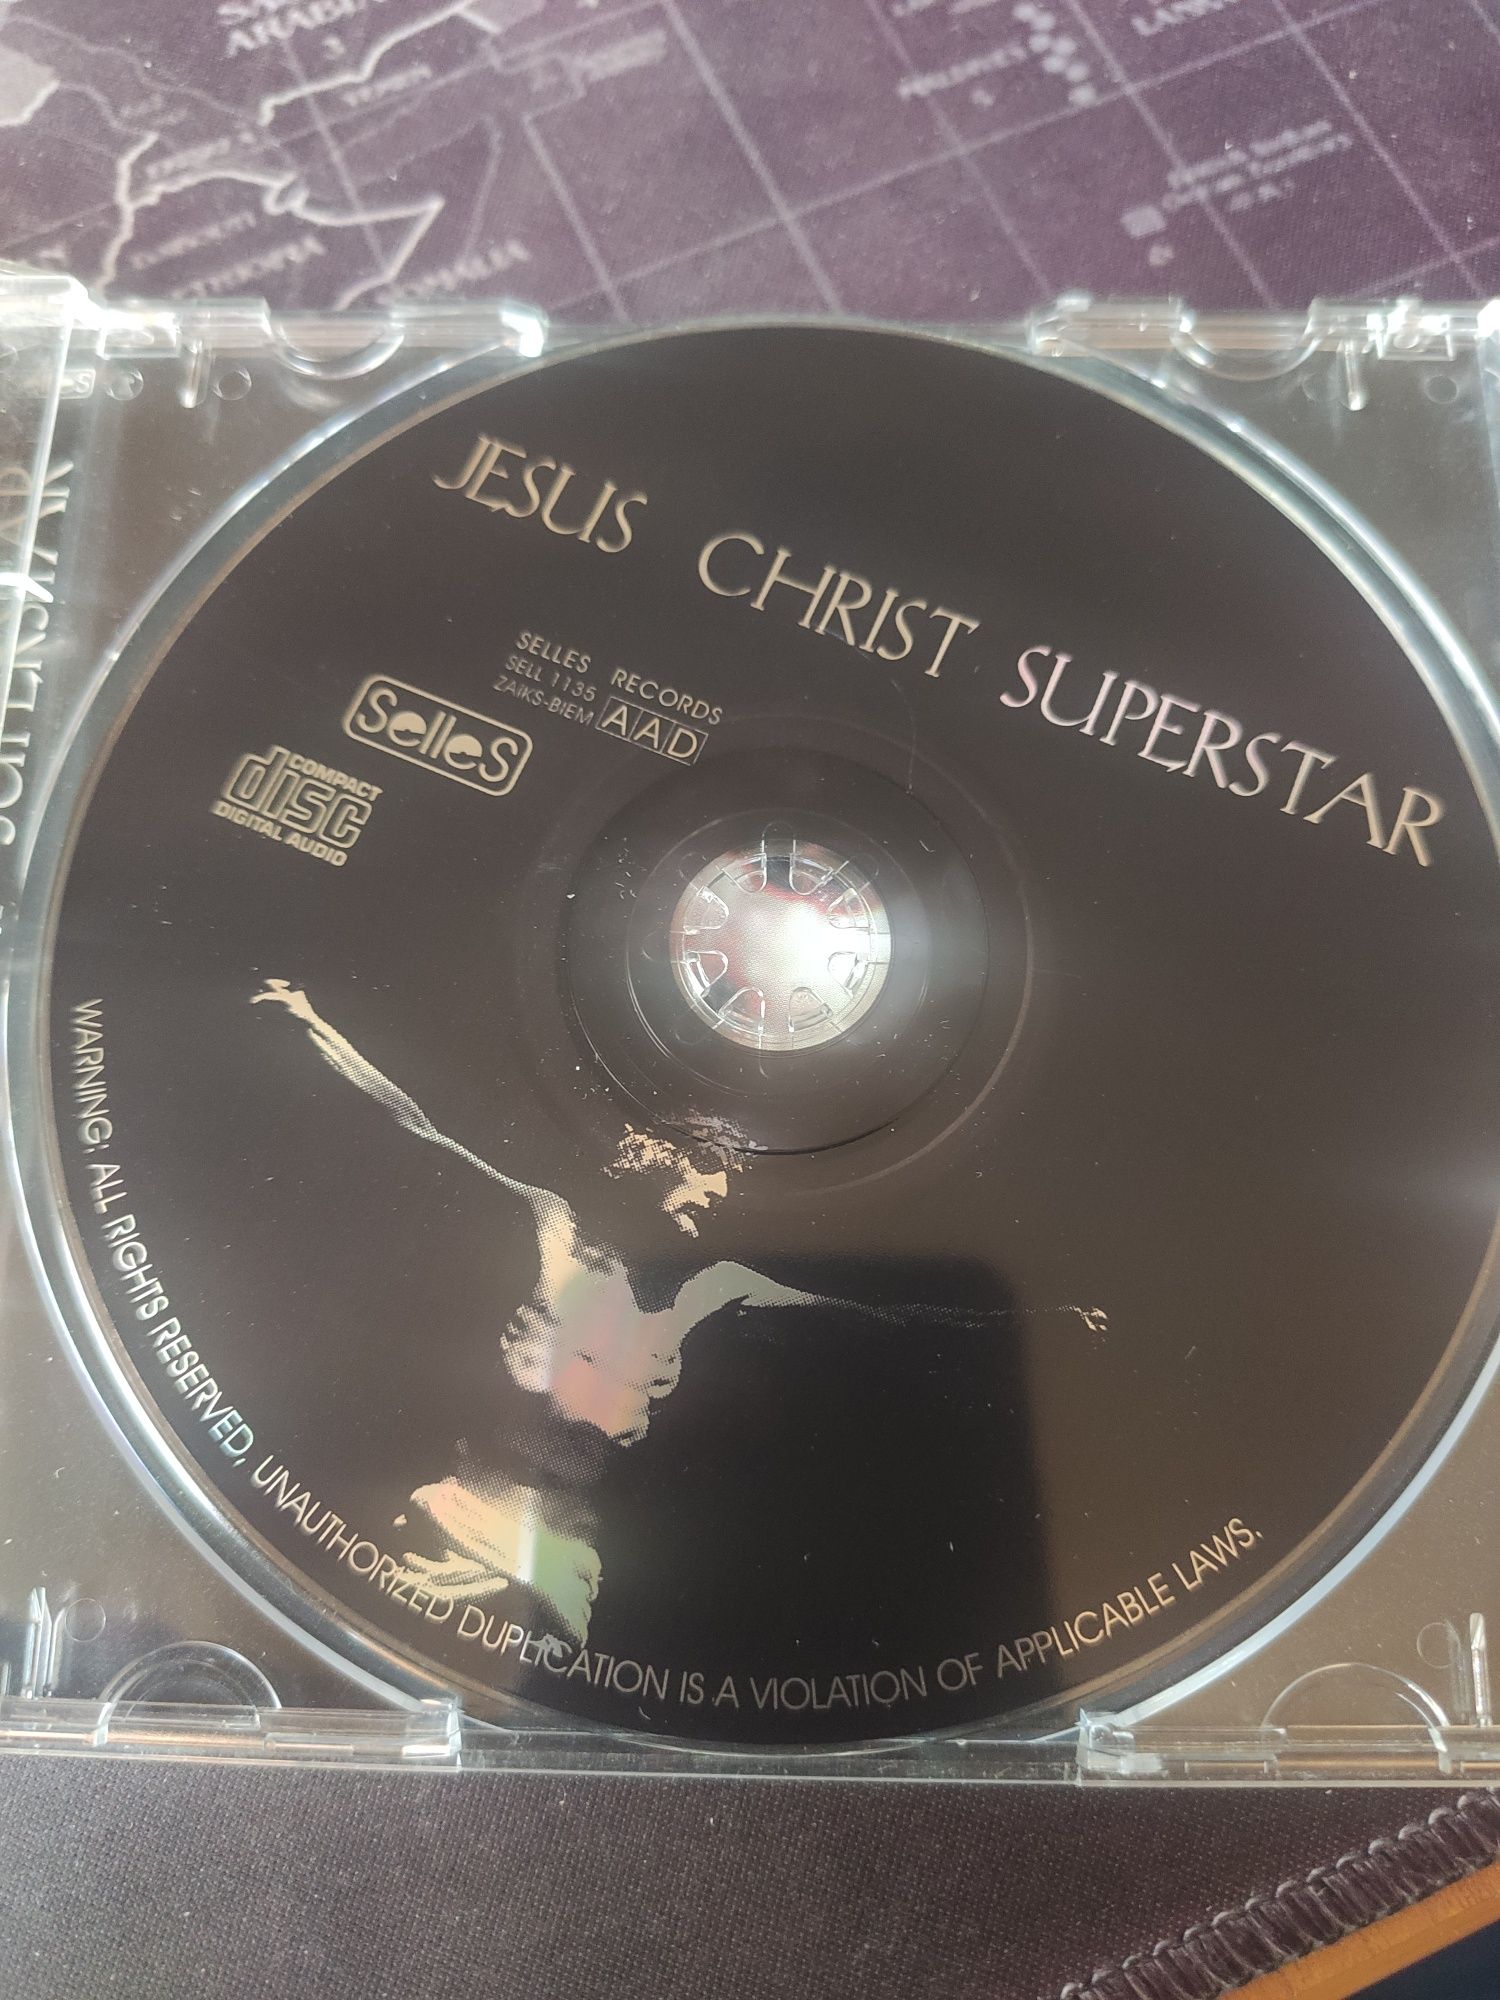 Jesus christ superstar CD